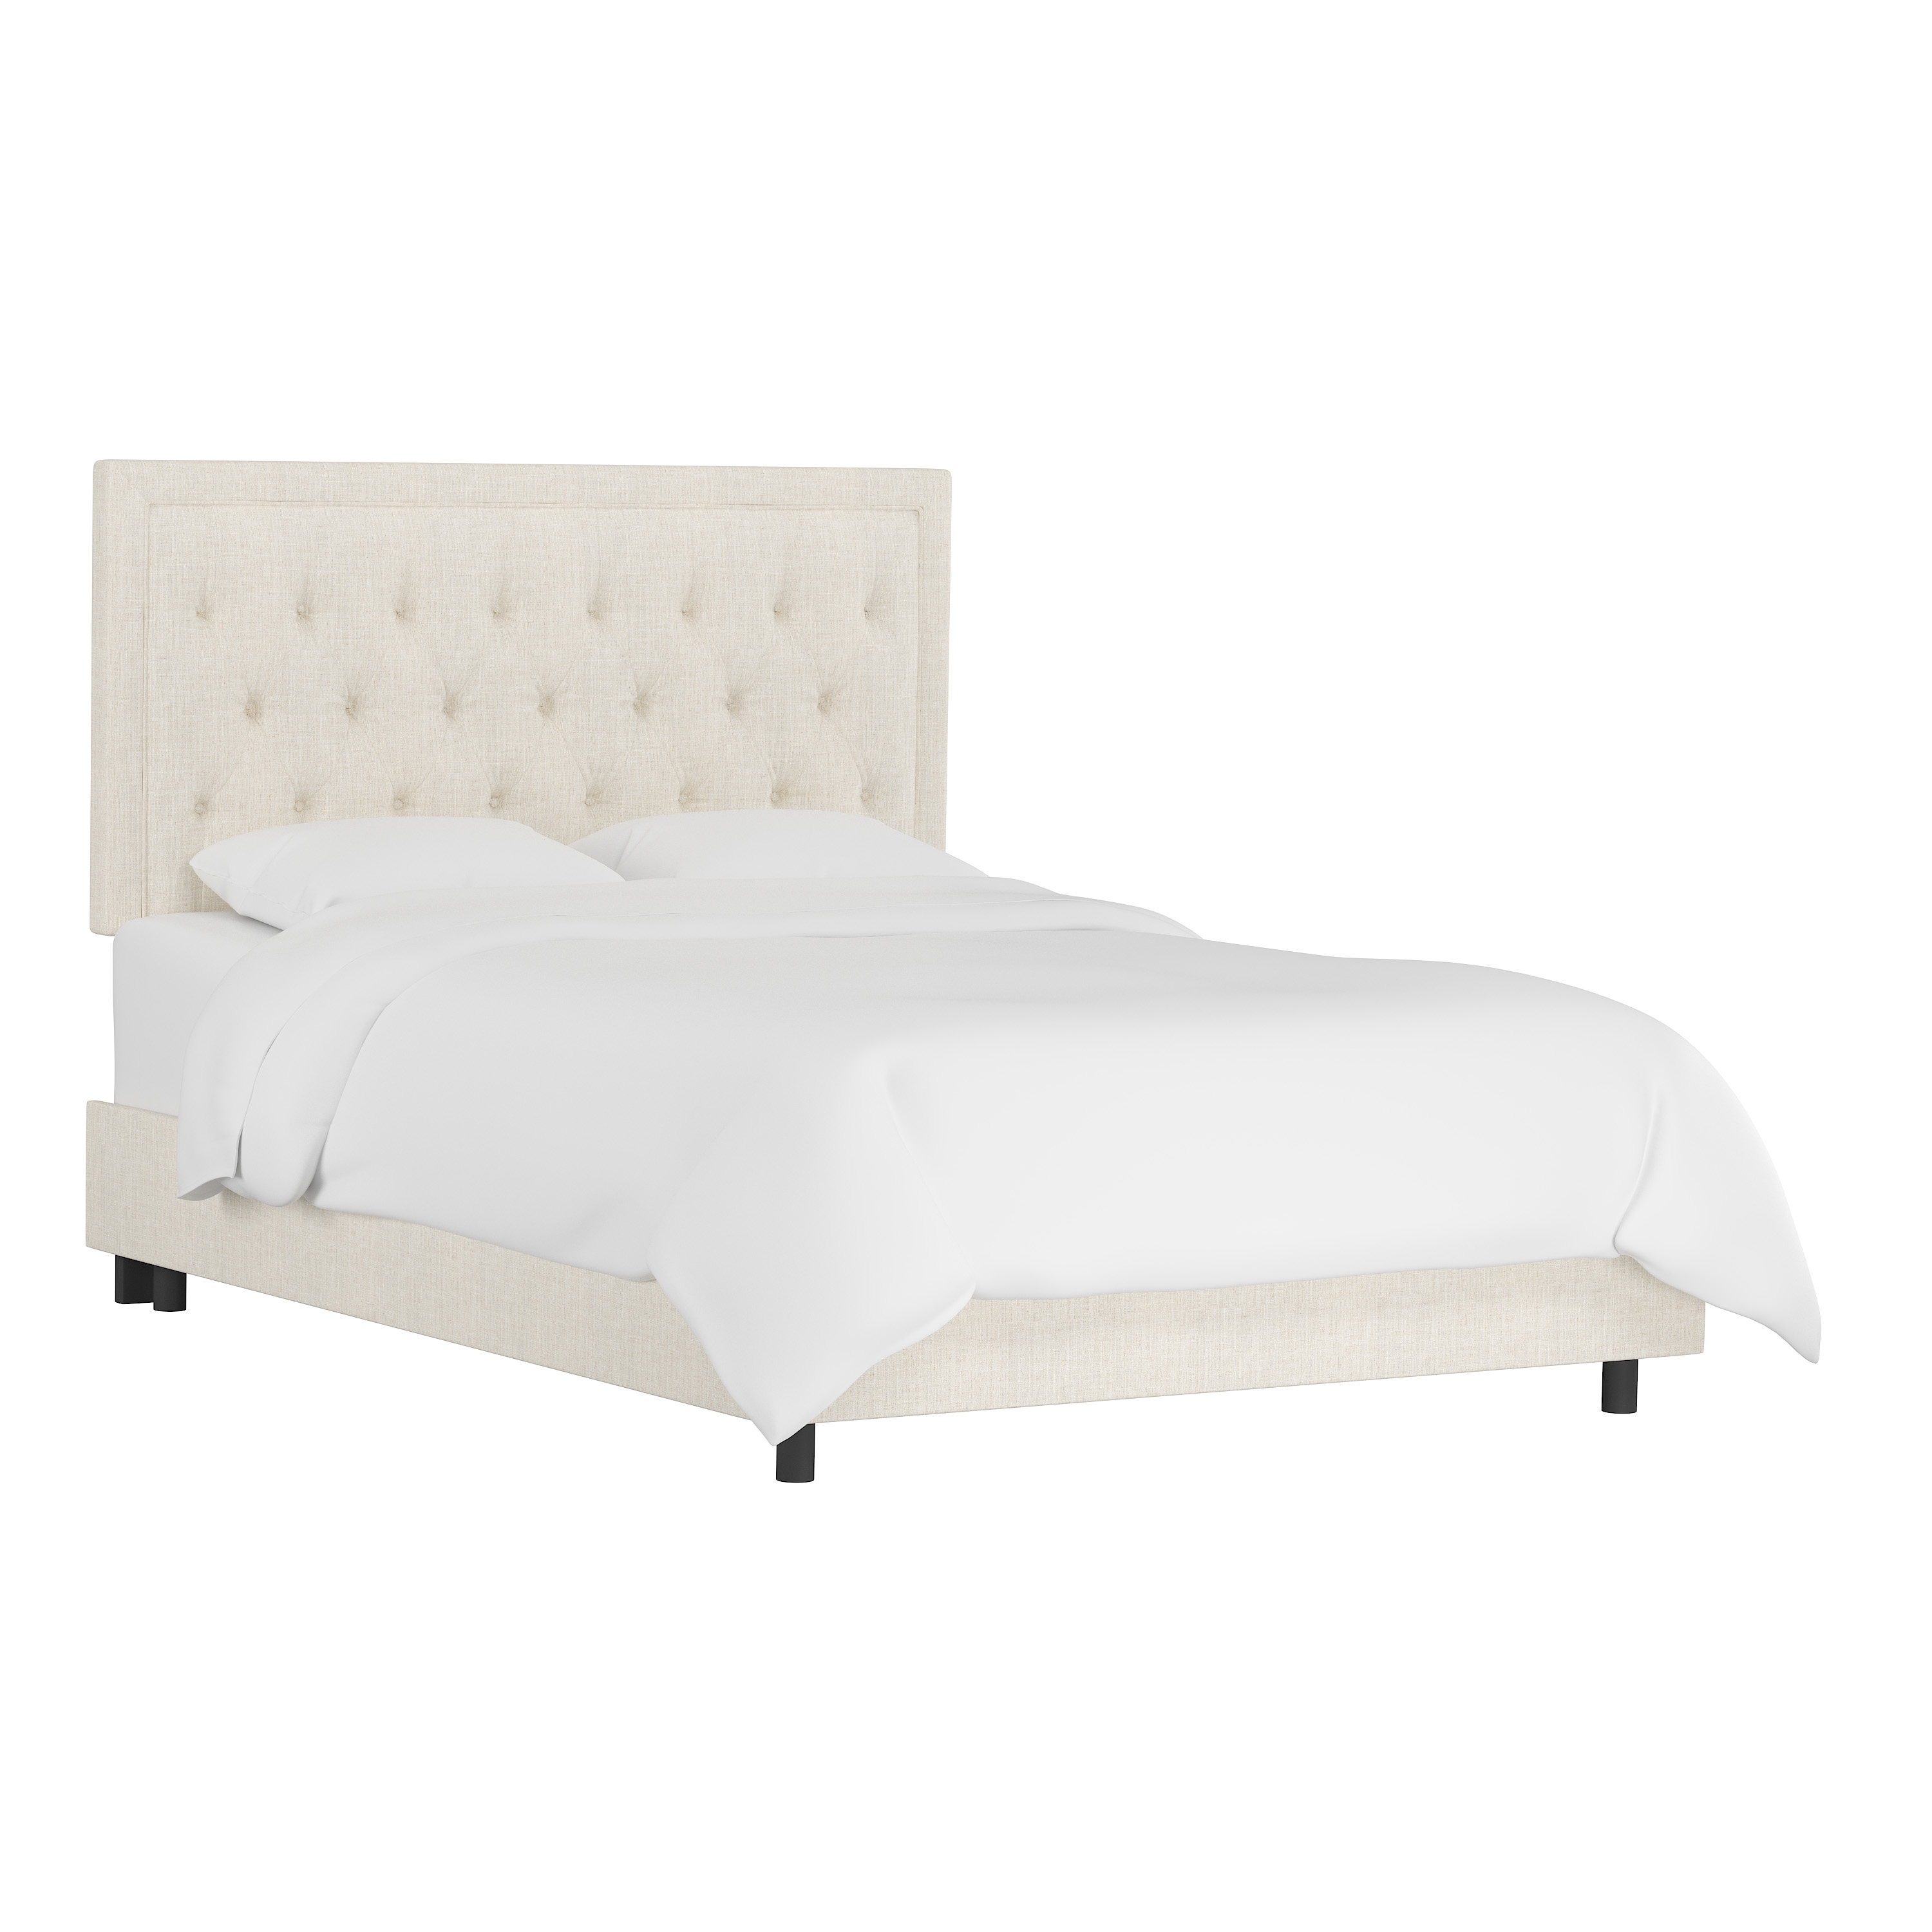 Lafayette Bed, Full, Talc - Image 0